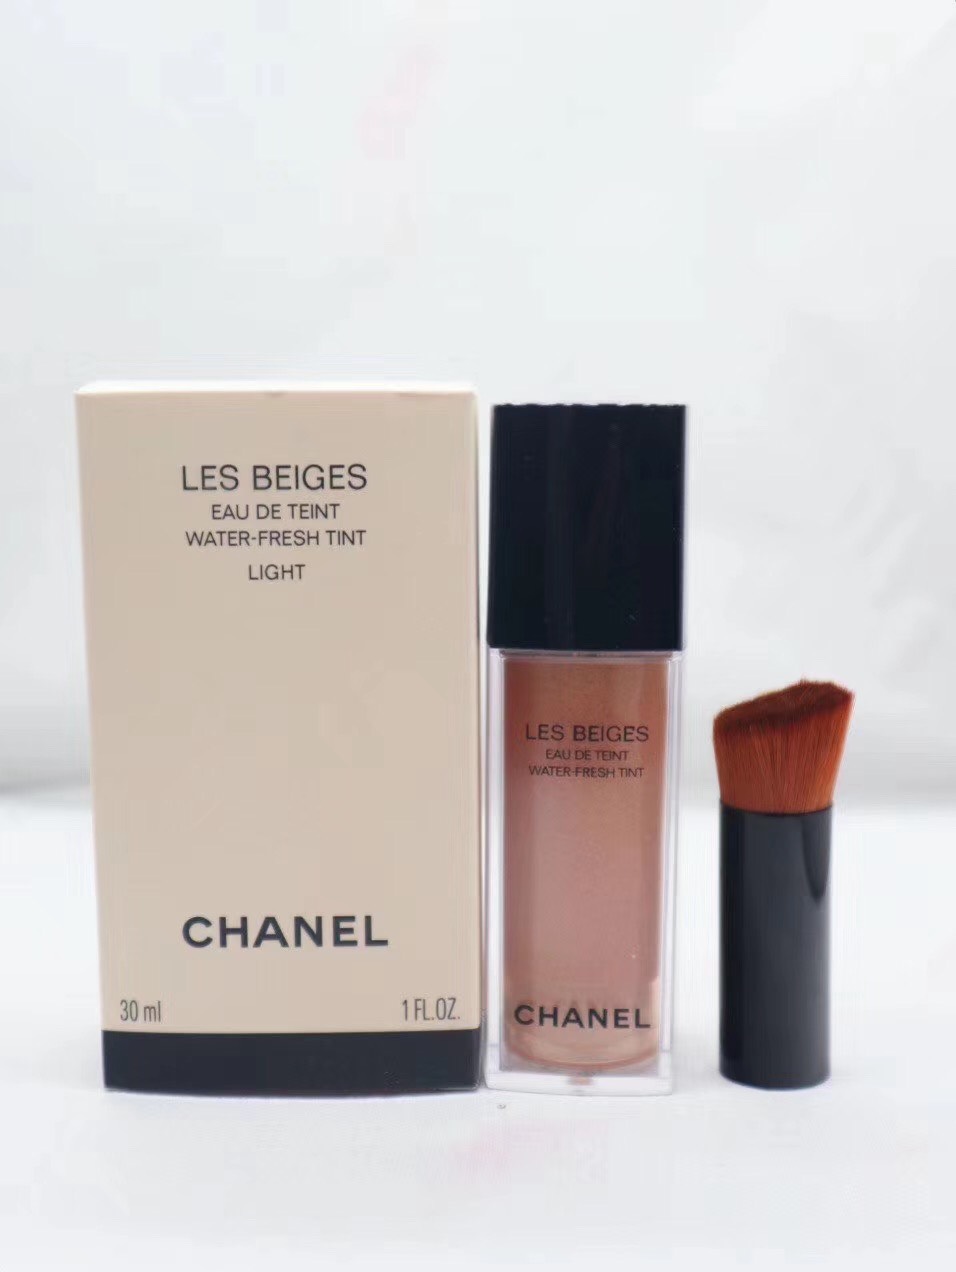 CHANEL Les Beiges Eau De\' Teint Water Fresh Tint ขนาดปกติ 30ml. สี light พร้อมแปรงในกล่อง